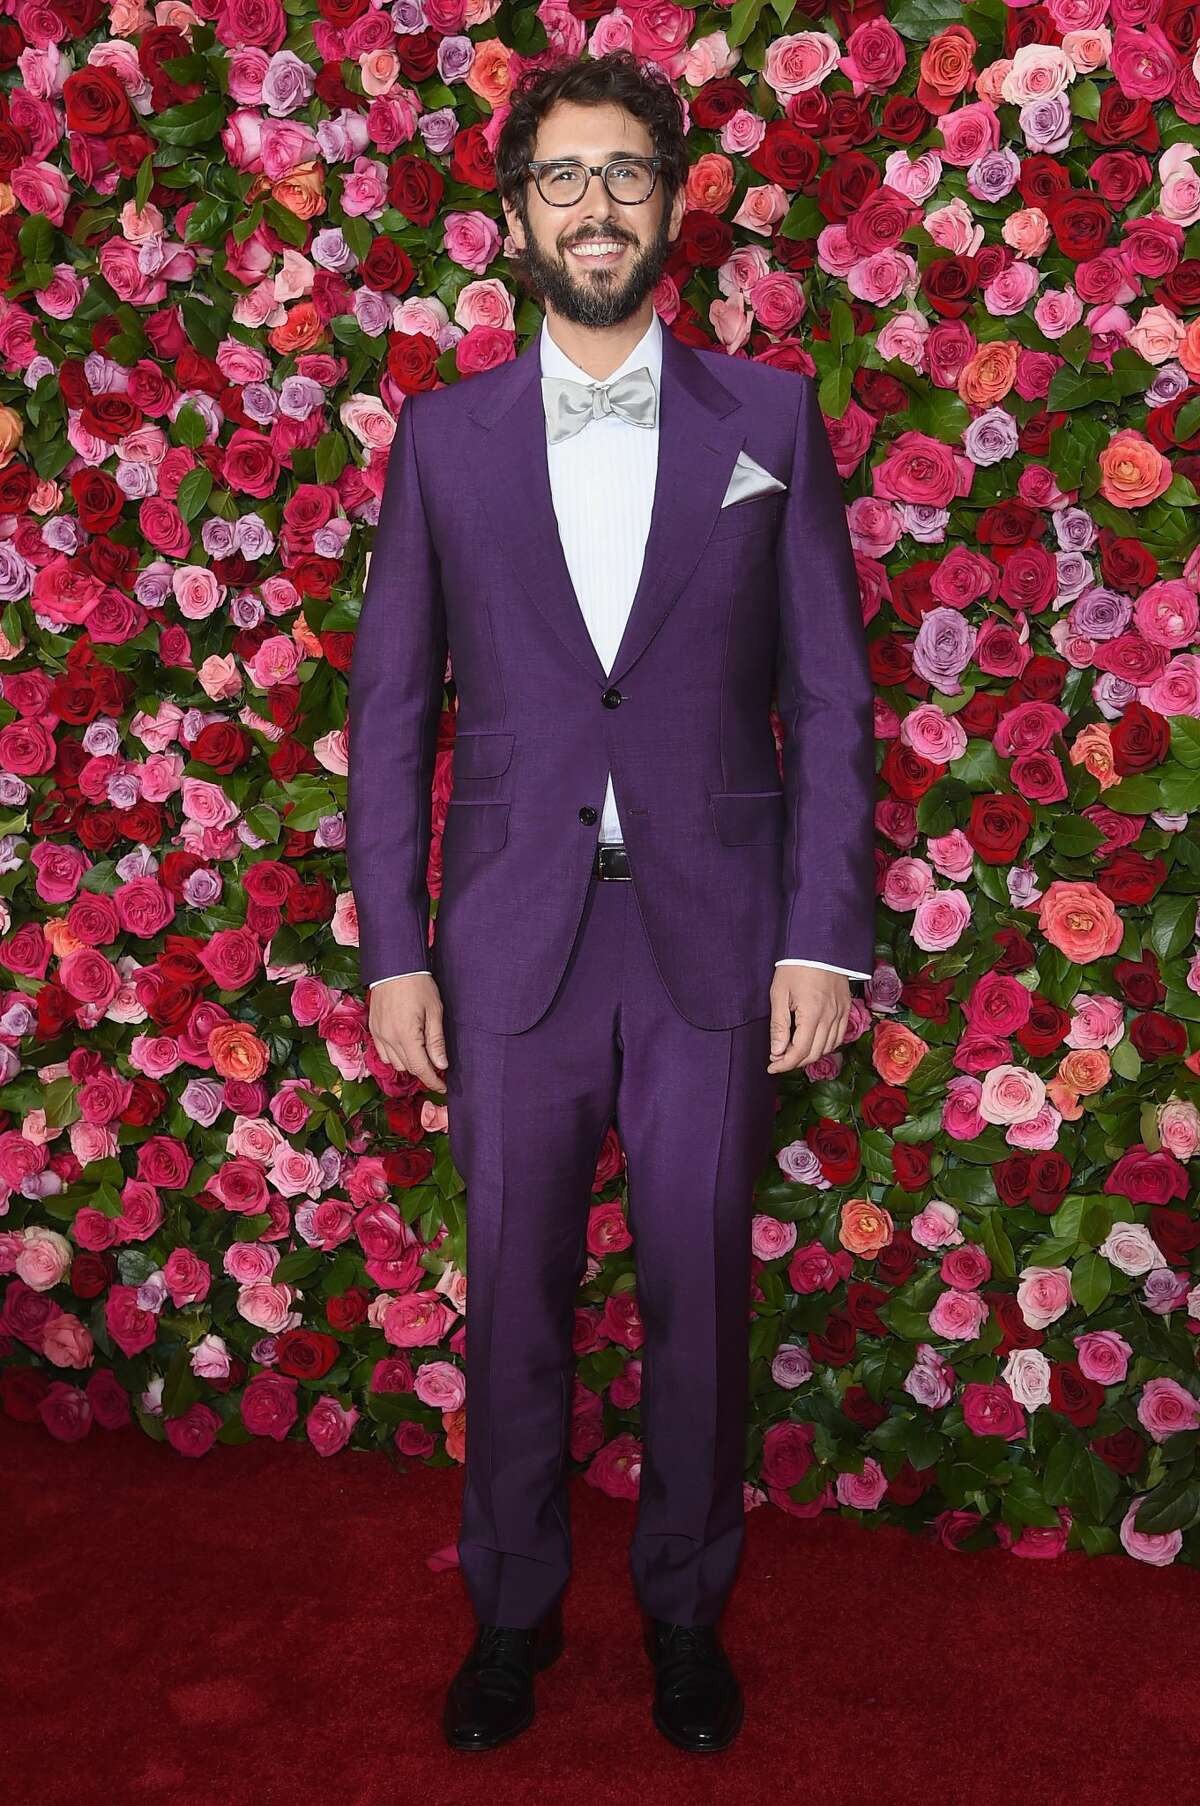 Best: Josh Groban is beaming like a gem in this beautiful purple suit. 